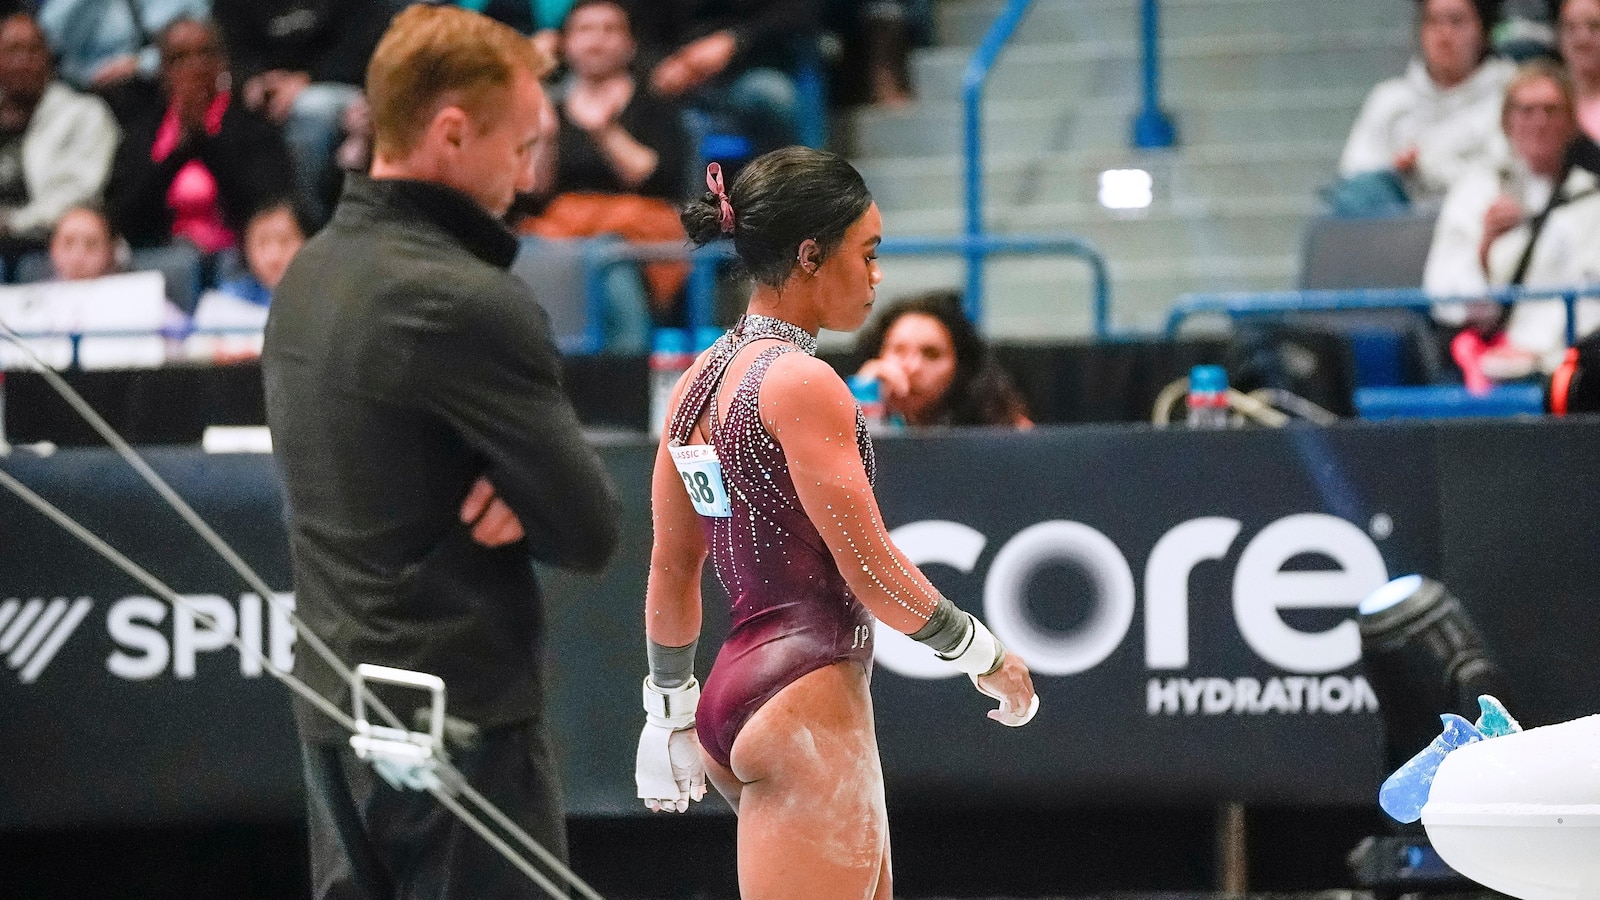 Gymnastics star Gabby Douglas pulls out of US Championships, ending